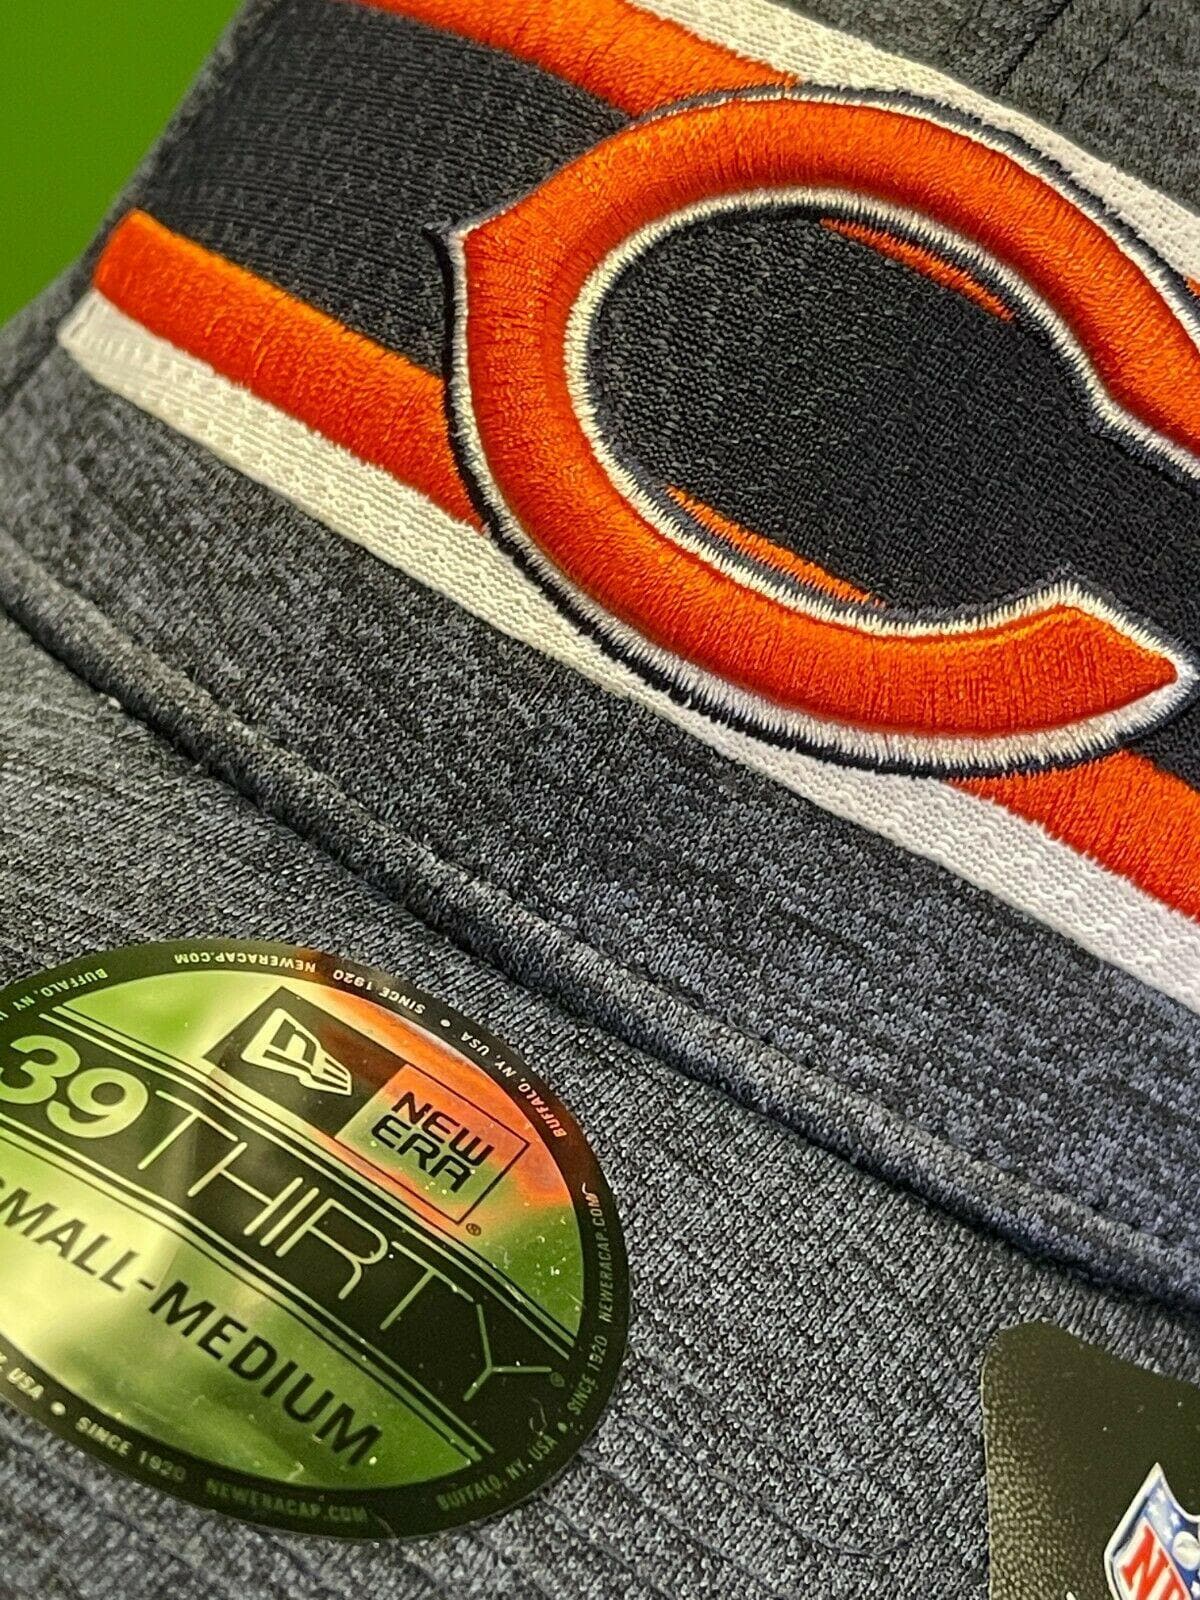 NFL Chicago Bears New Era 39THIRTY 2019 Thanksgiving Hat/Cap Small-Medium NWT